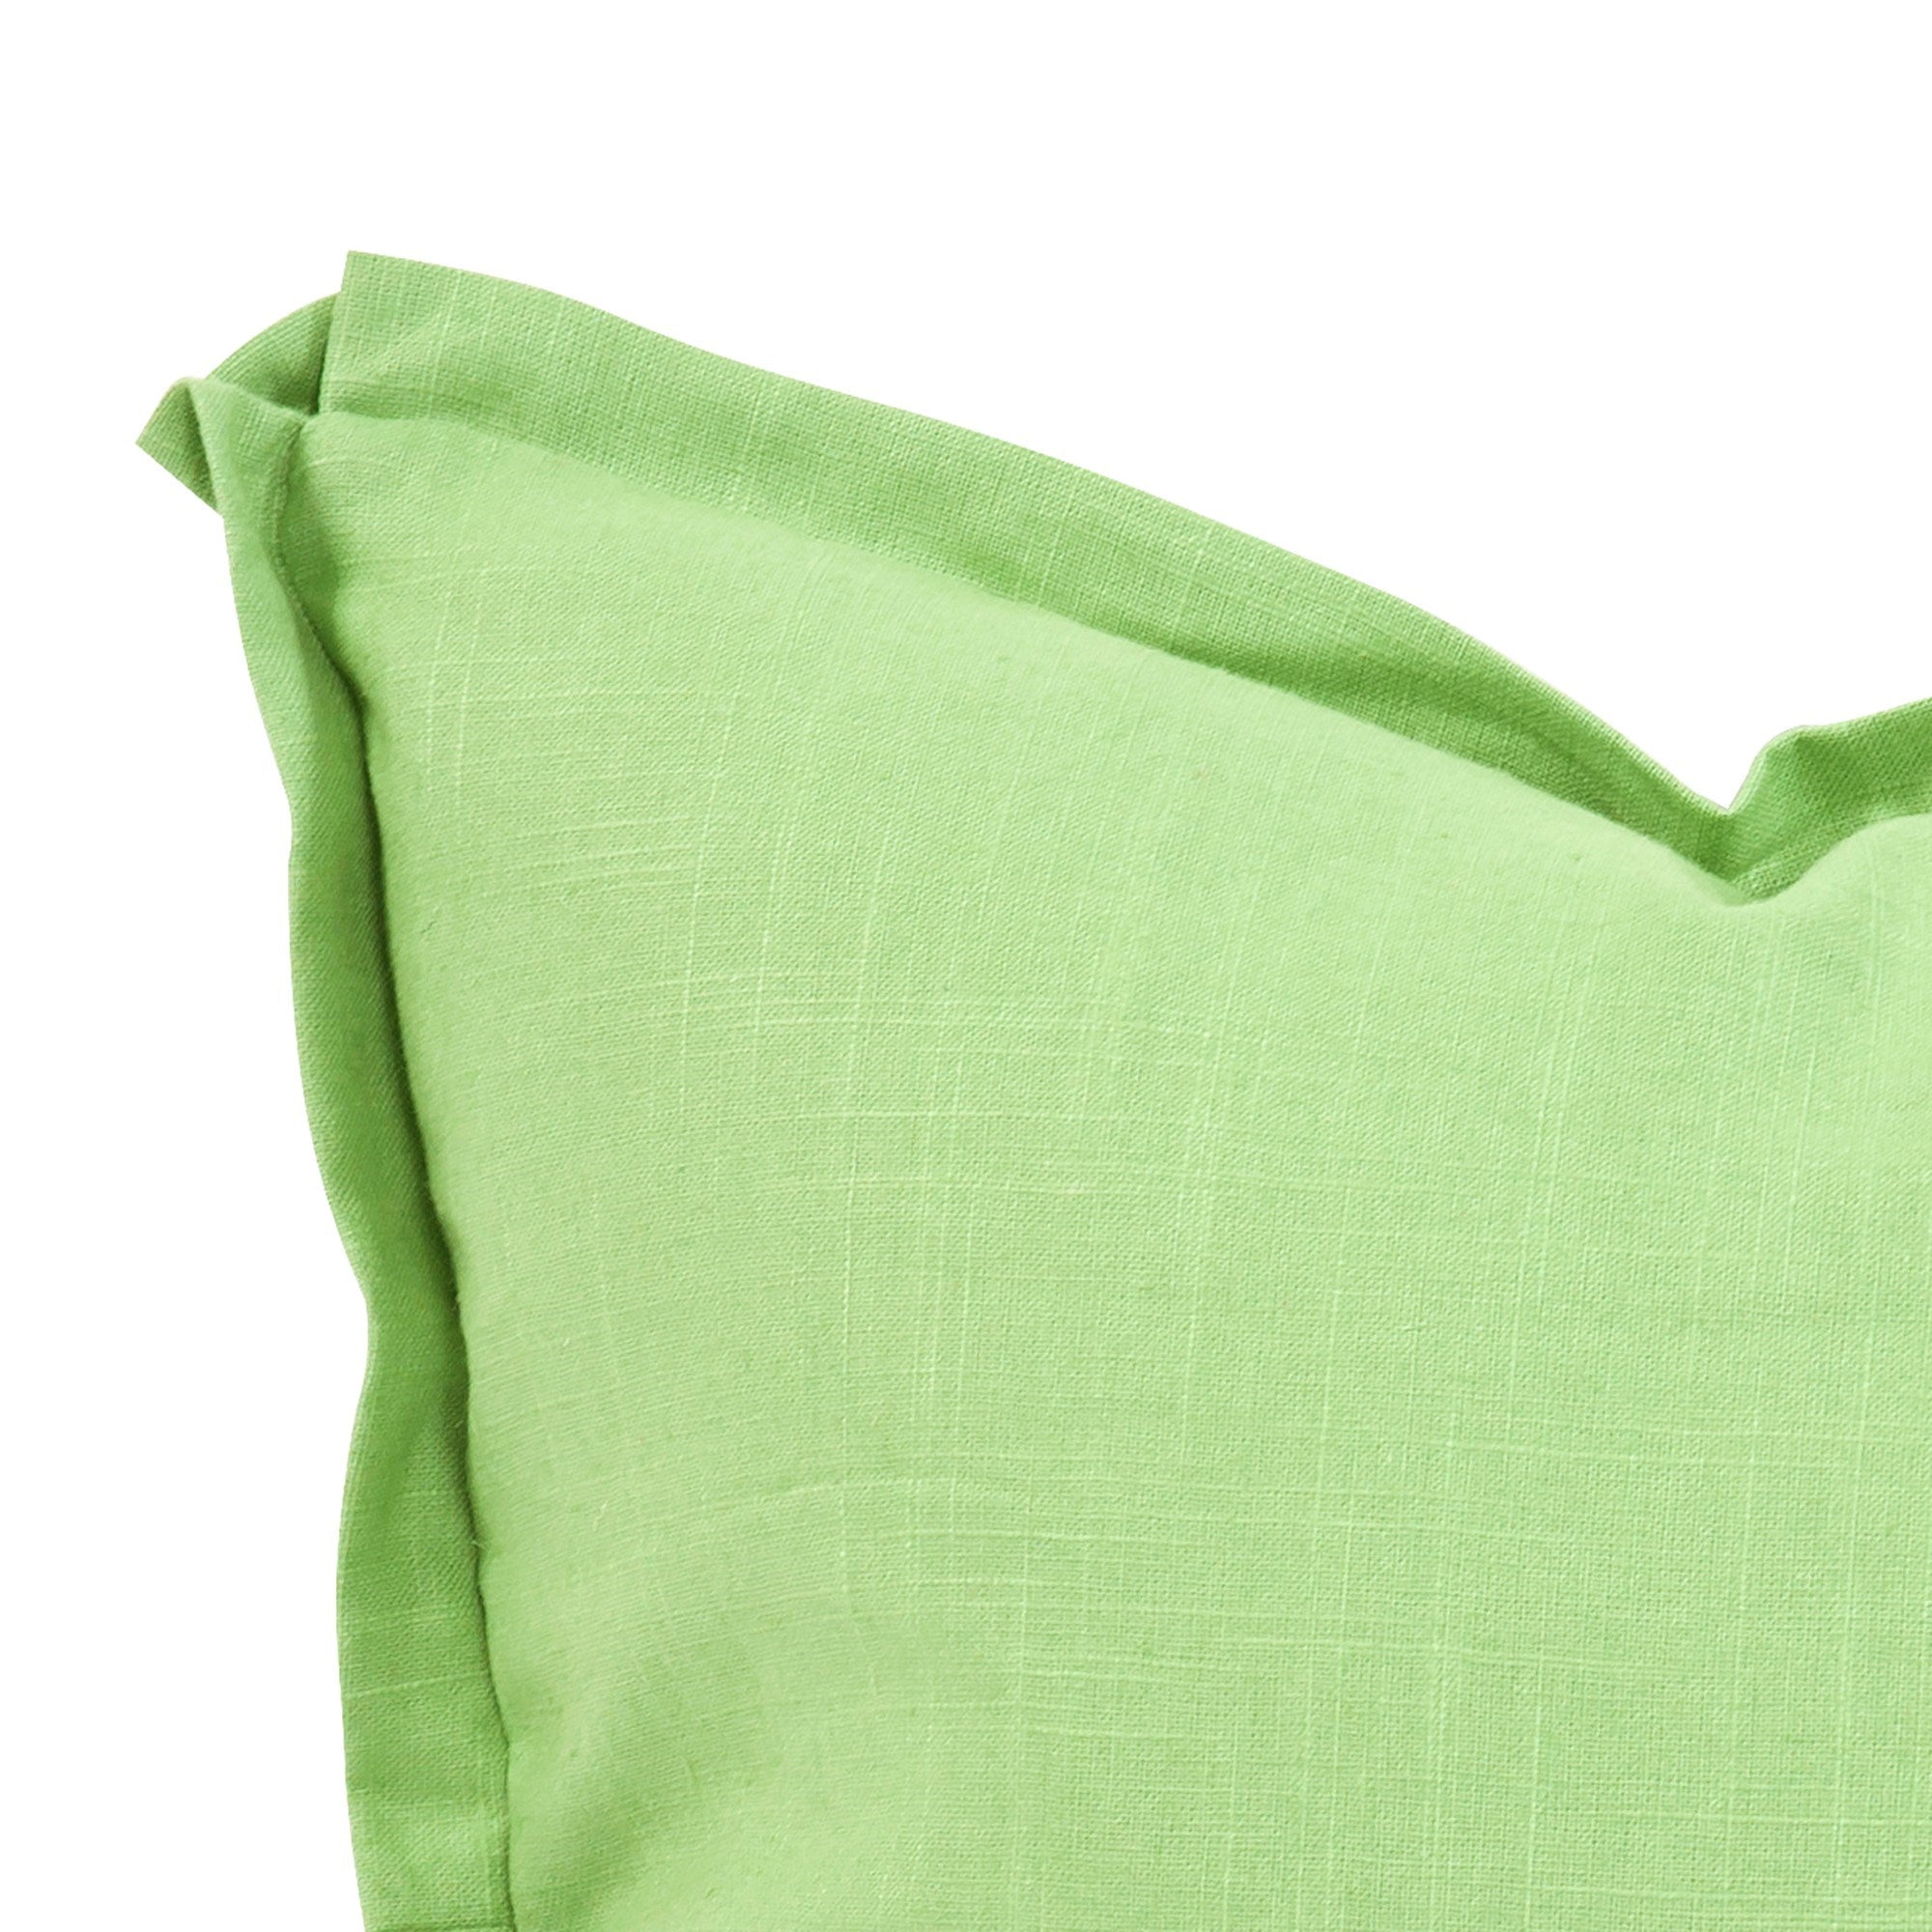 Linen Slub Grass Down Pillow- 20" x 20"